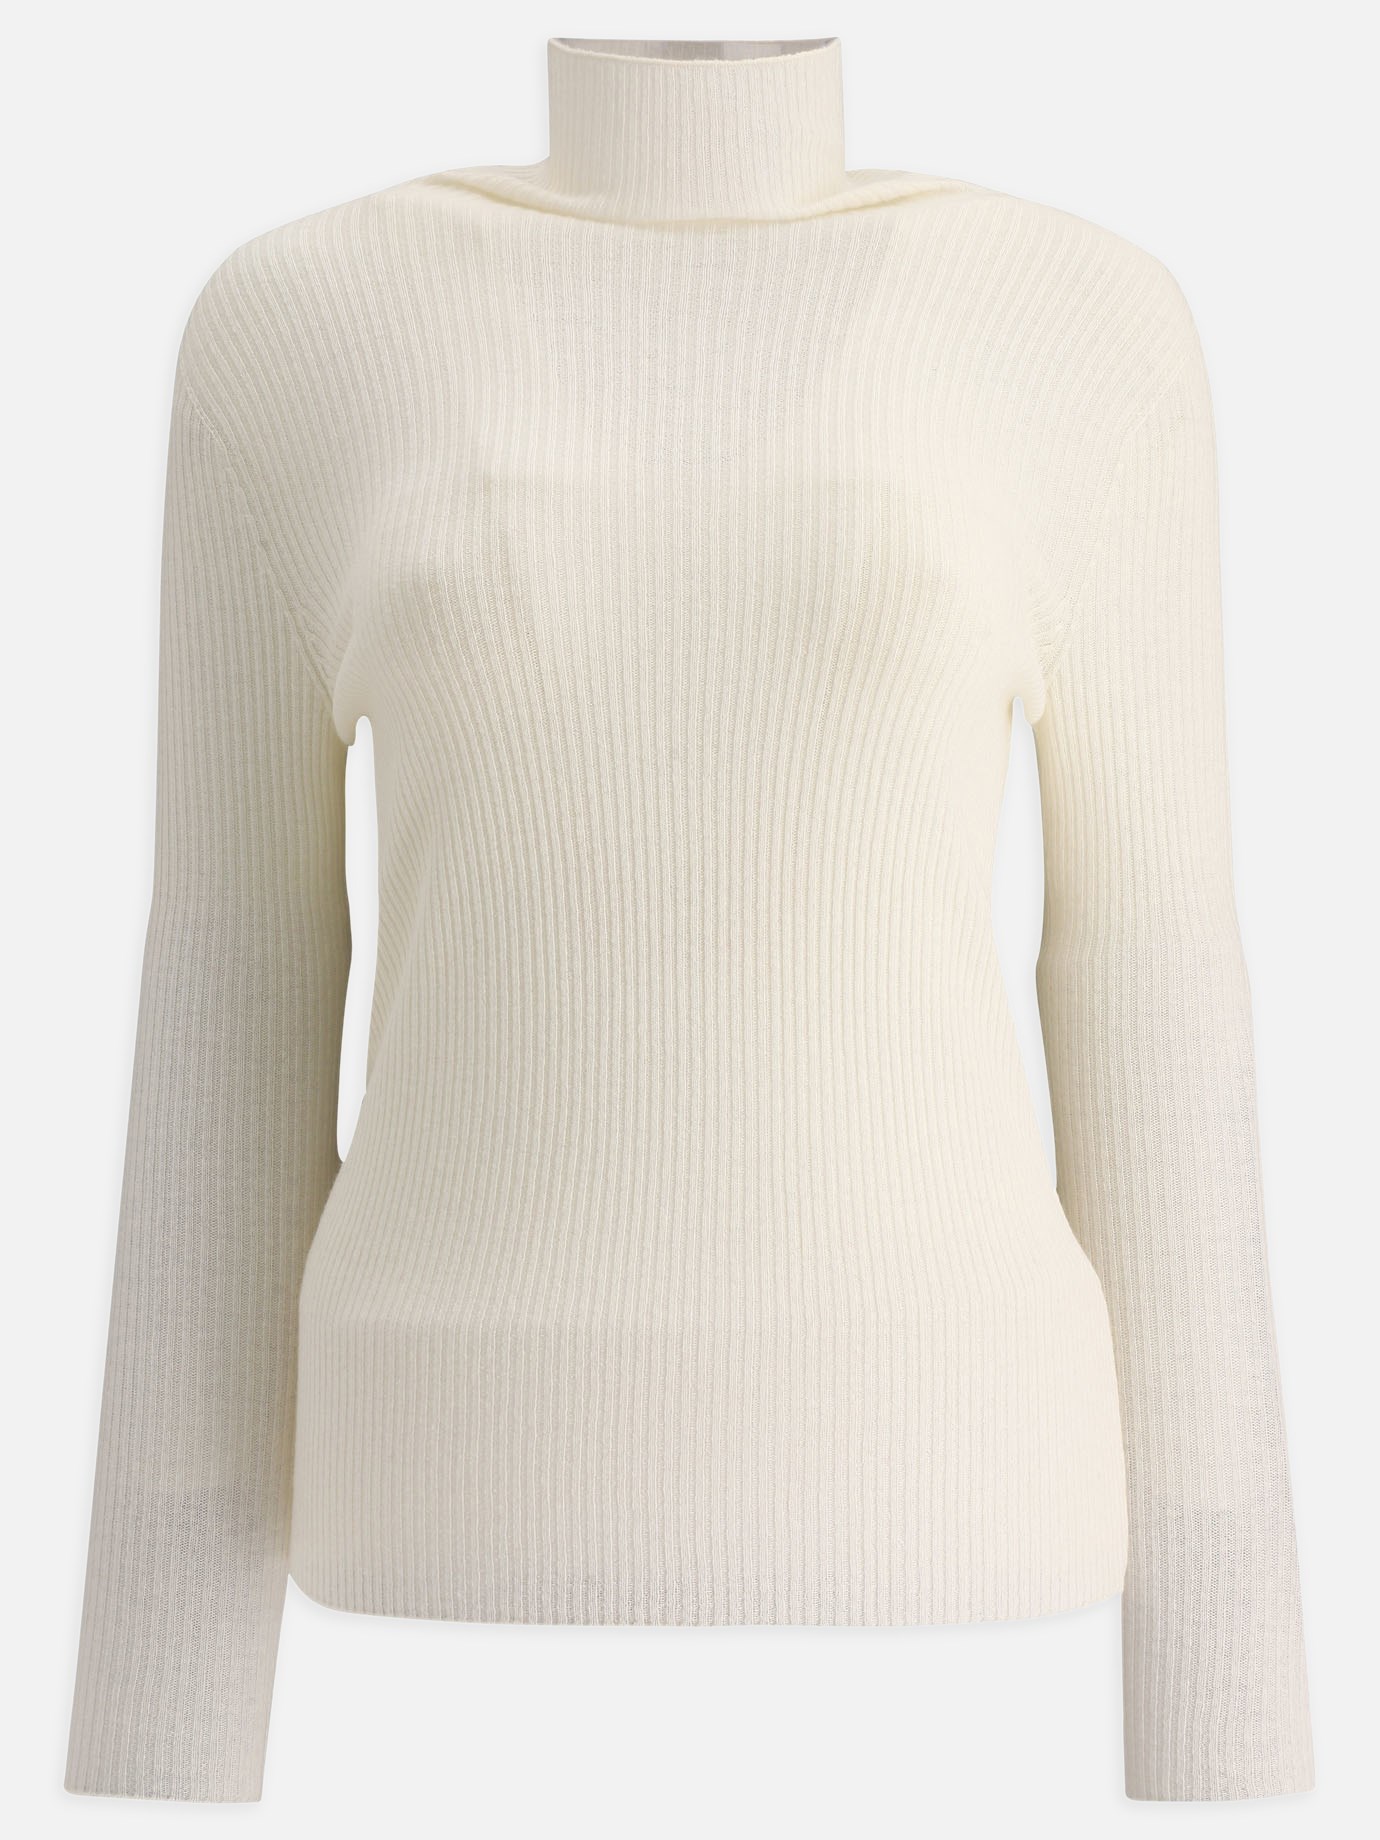 Ribbed turtleneck sweaterby Fabiana Filippi - 4